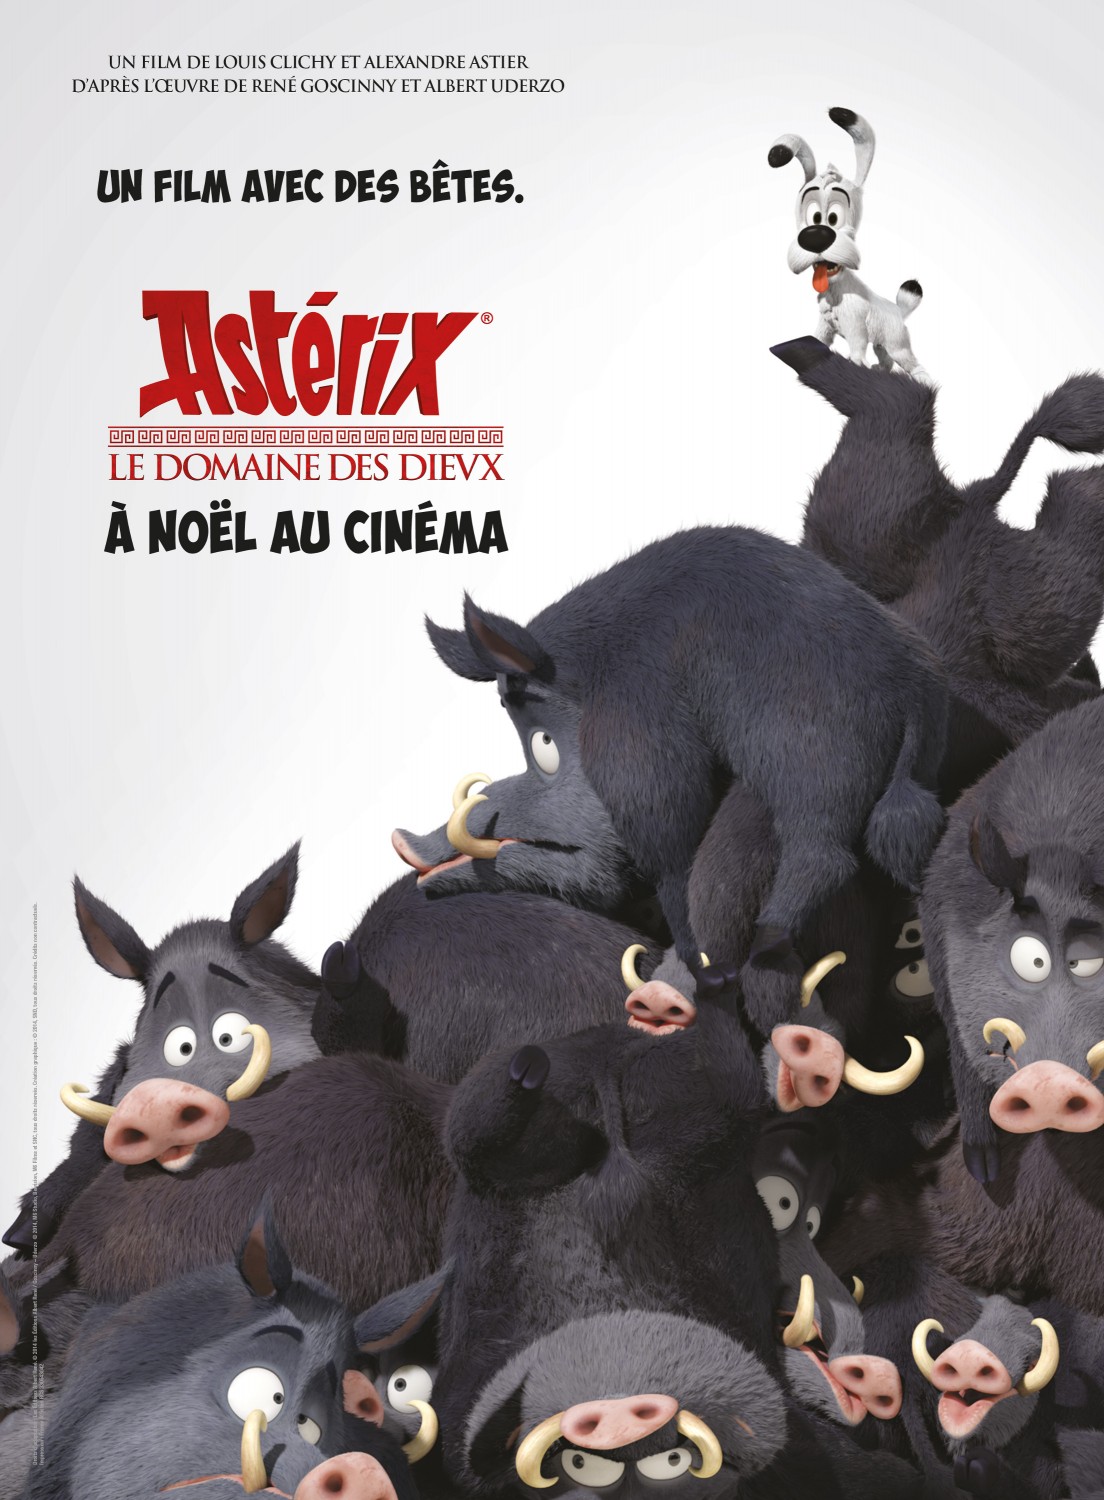 Extra Large Movie Poster Image for Astérix: Le domaine des dieux (#3 of 9)